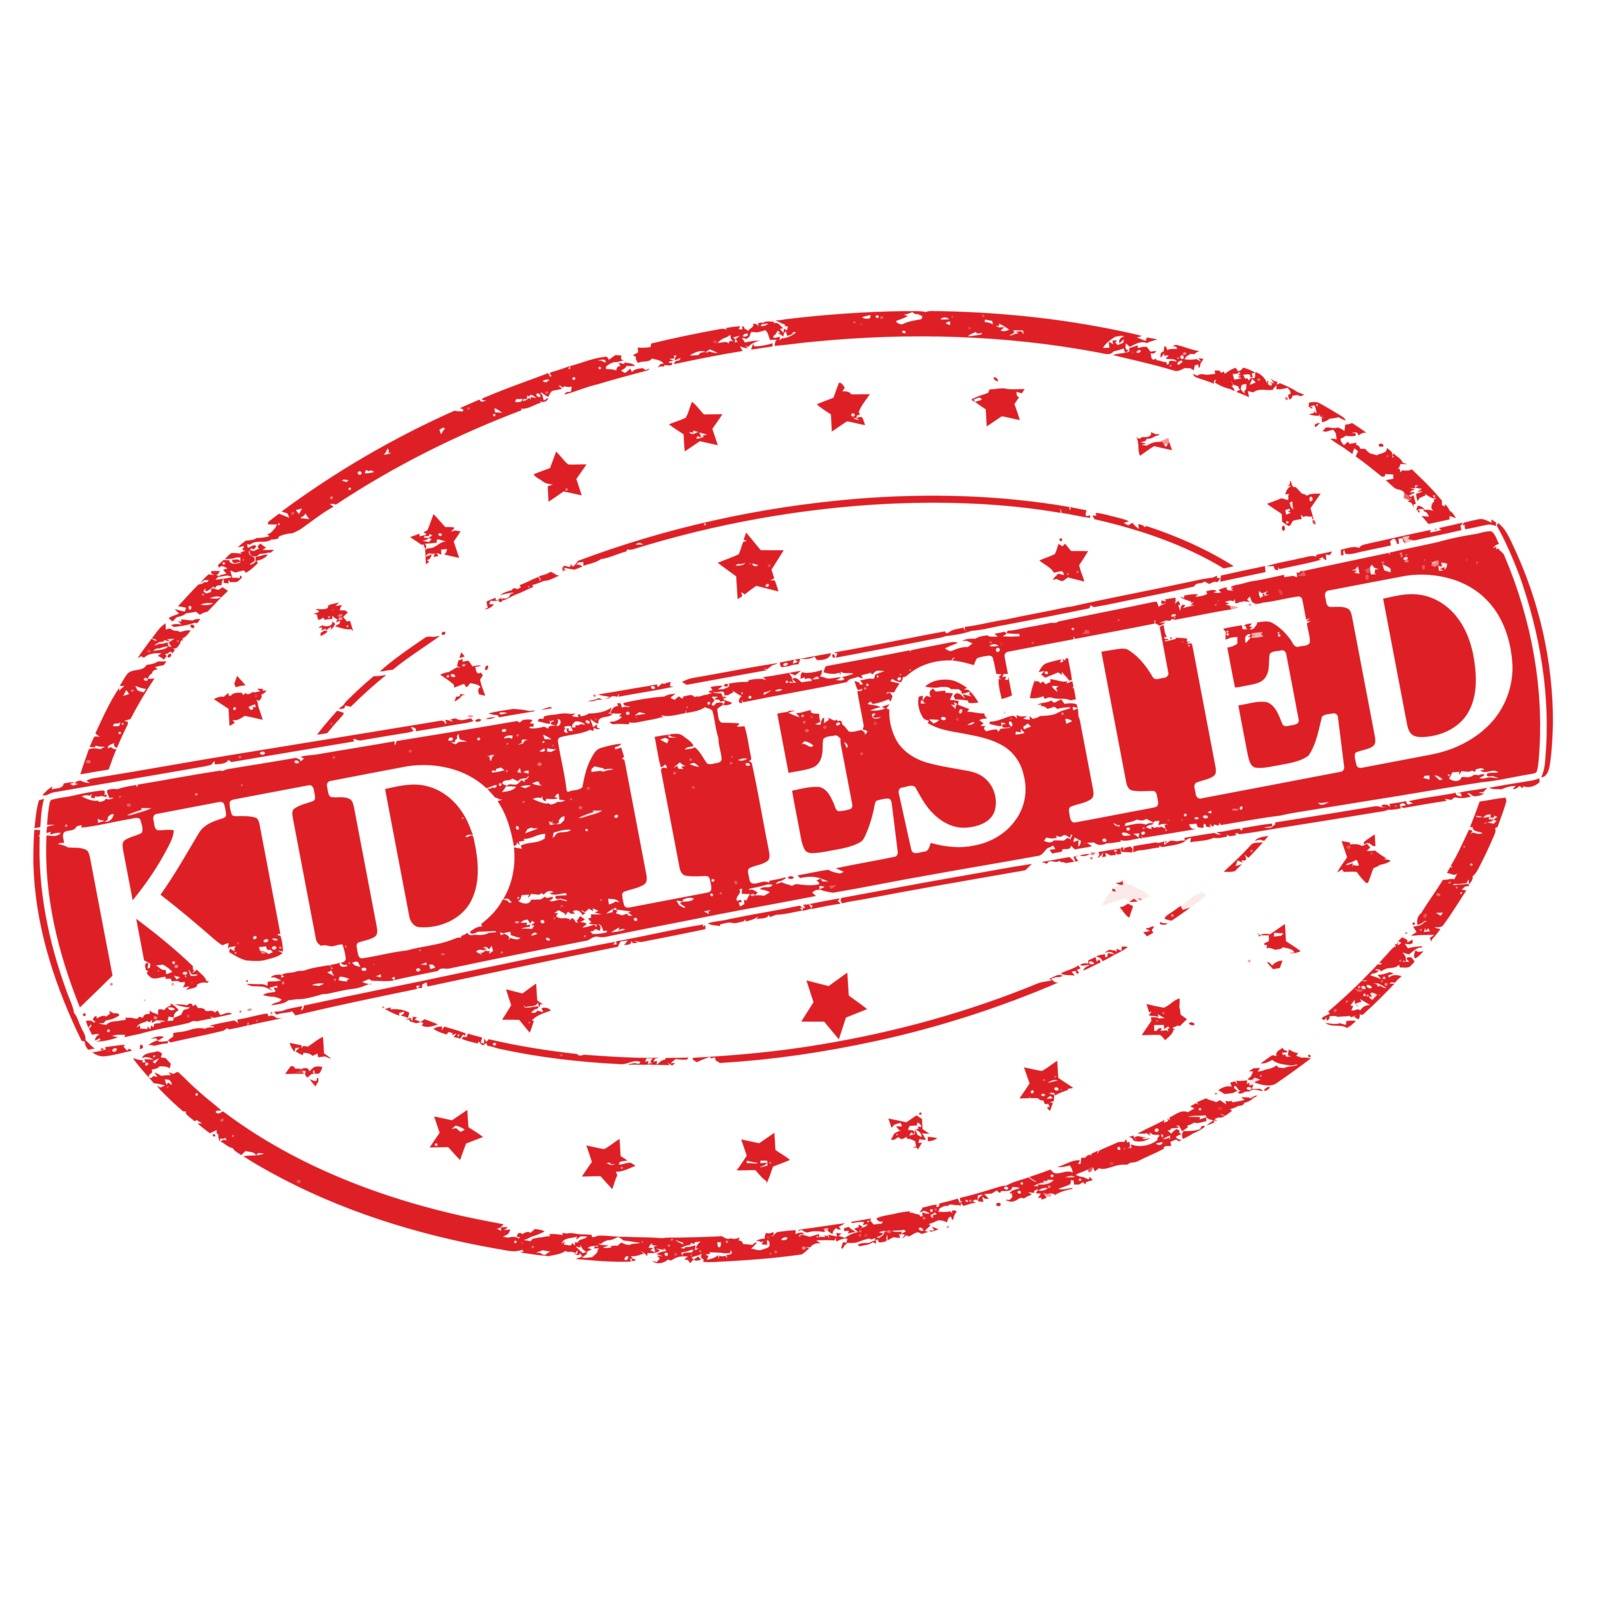 Kid tested by carmenbobo